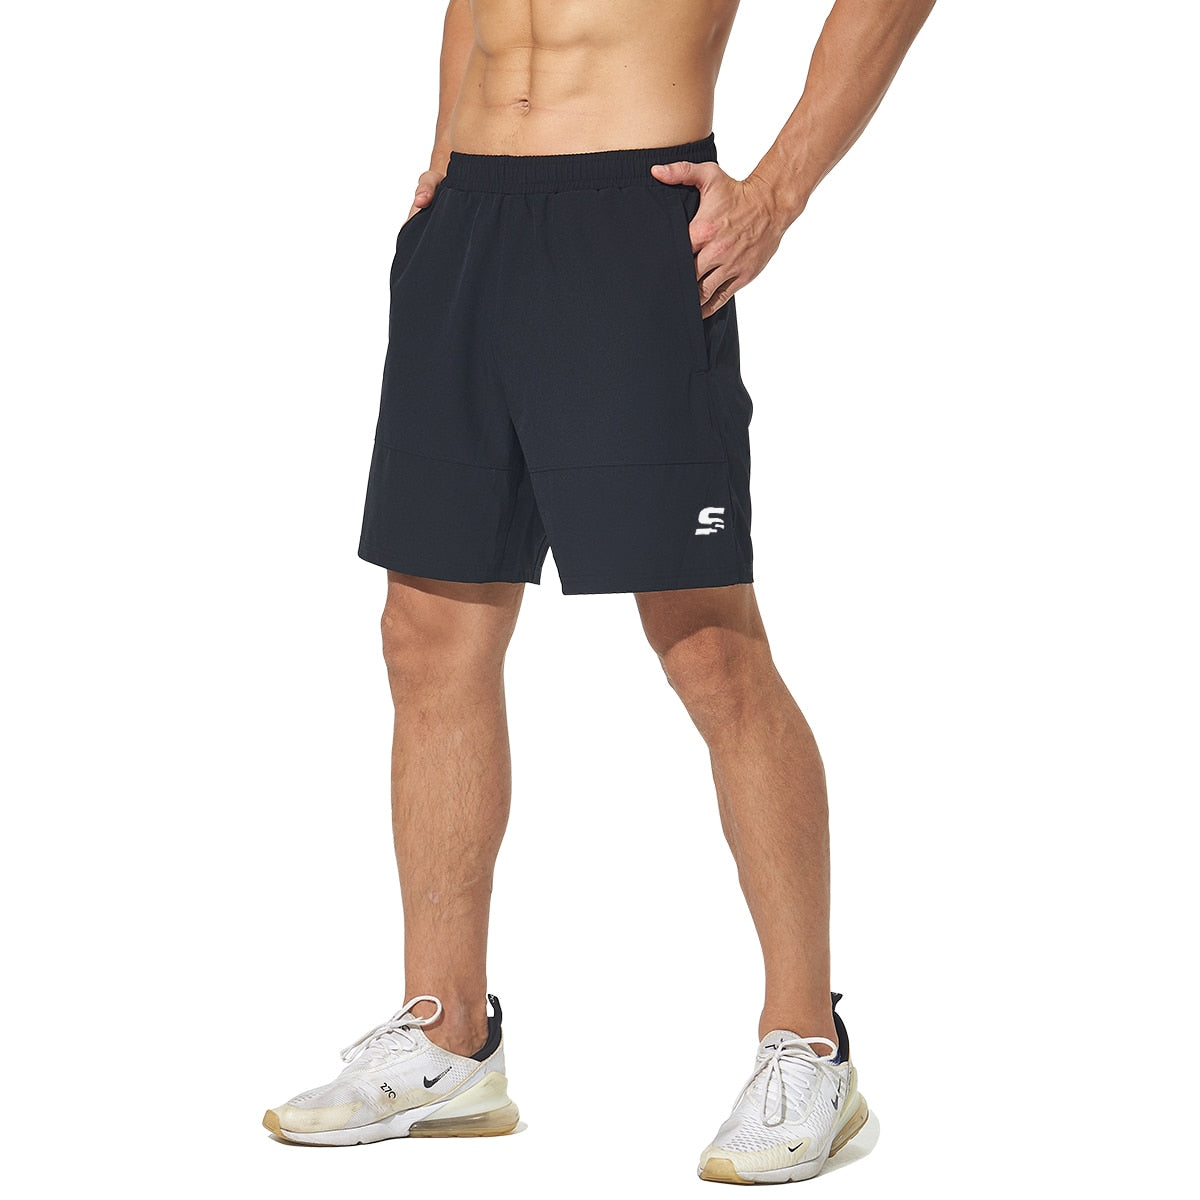 Gym Shorts Men Quick Dry Workout Jogging